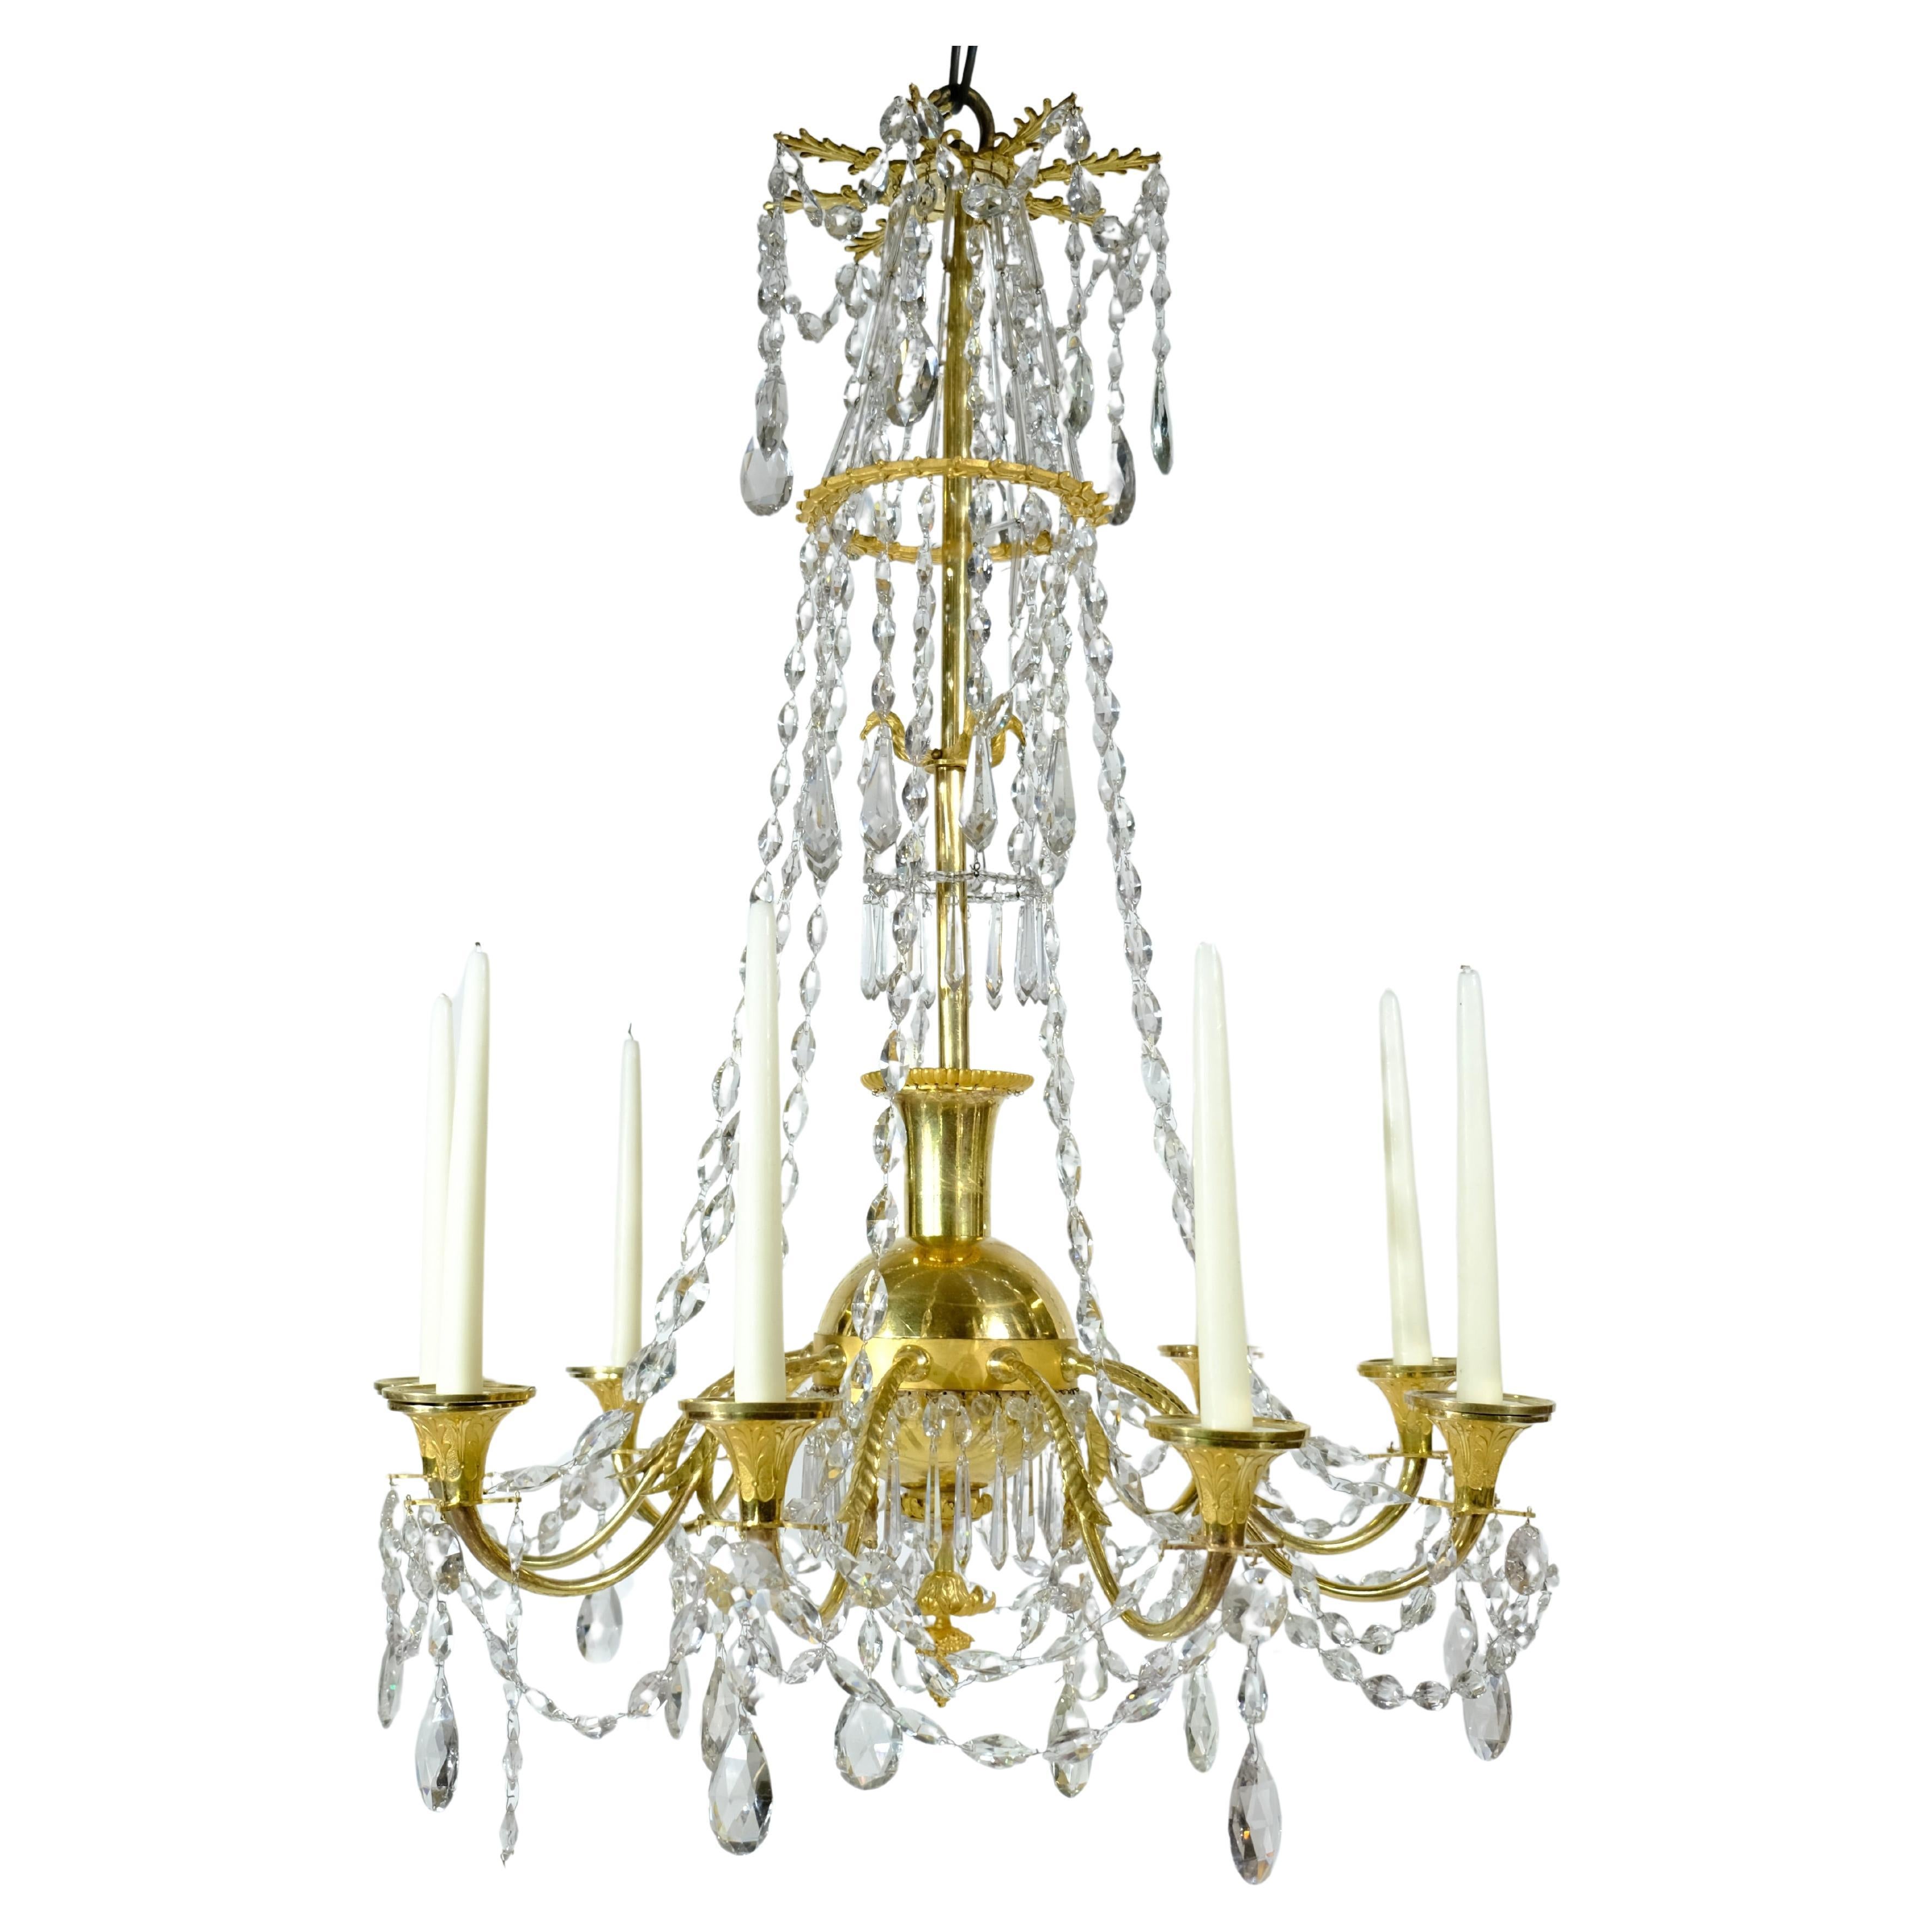 Antique French chandelier made around year 1800